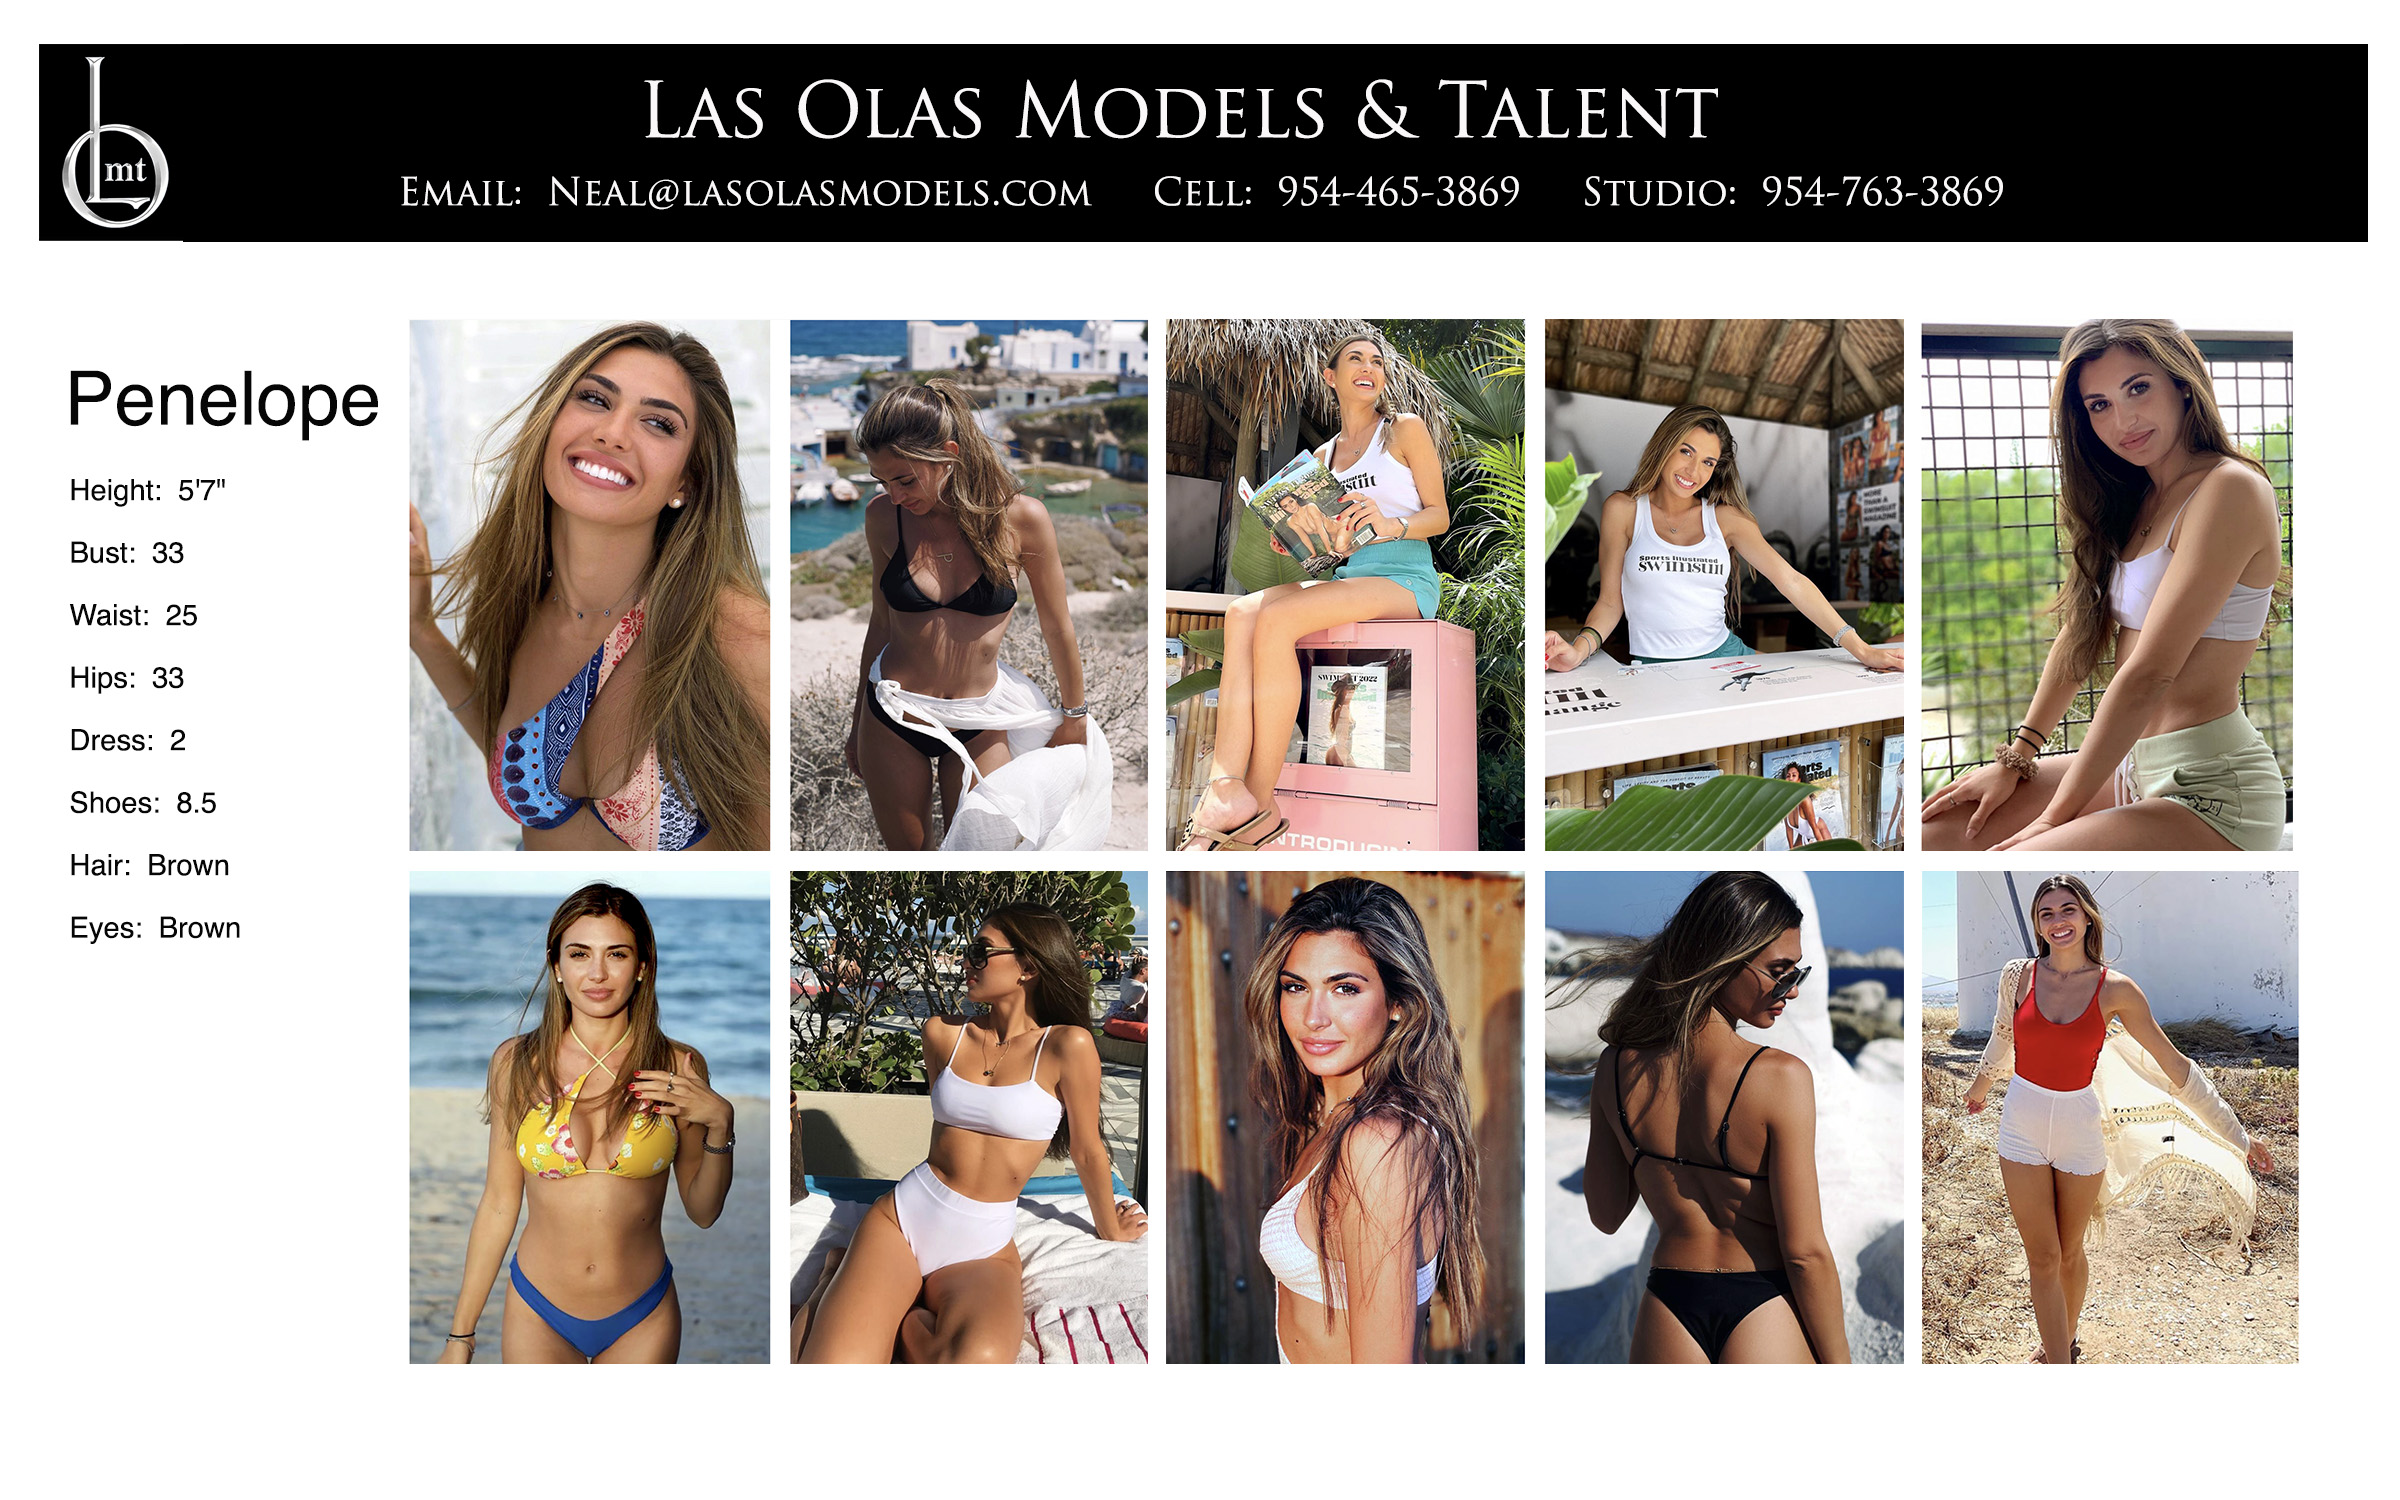 Models Fort Lauderdale Miami South Florida Print Commercial Video Las Olas Models & Talent - Penelope Comp